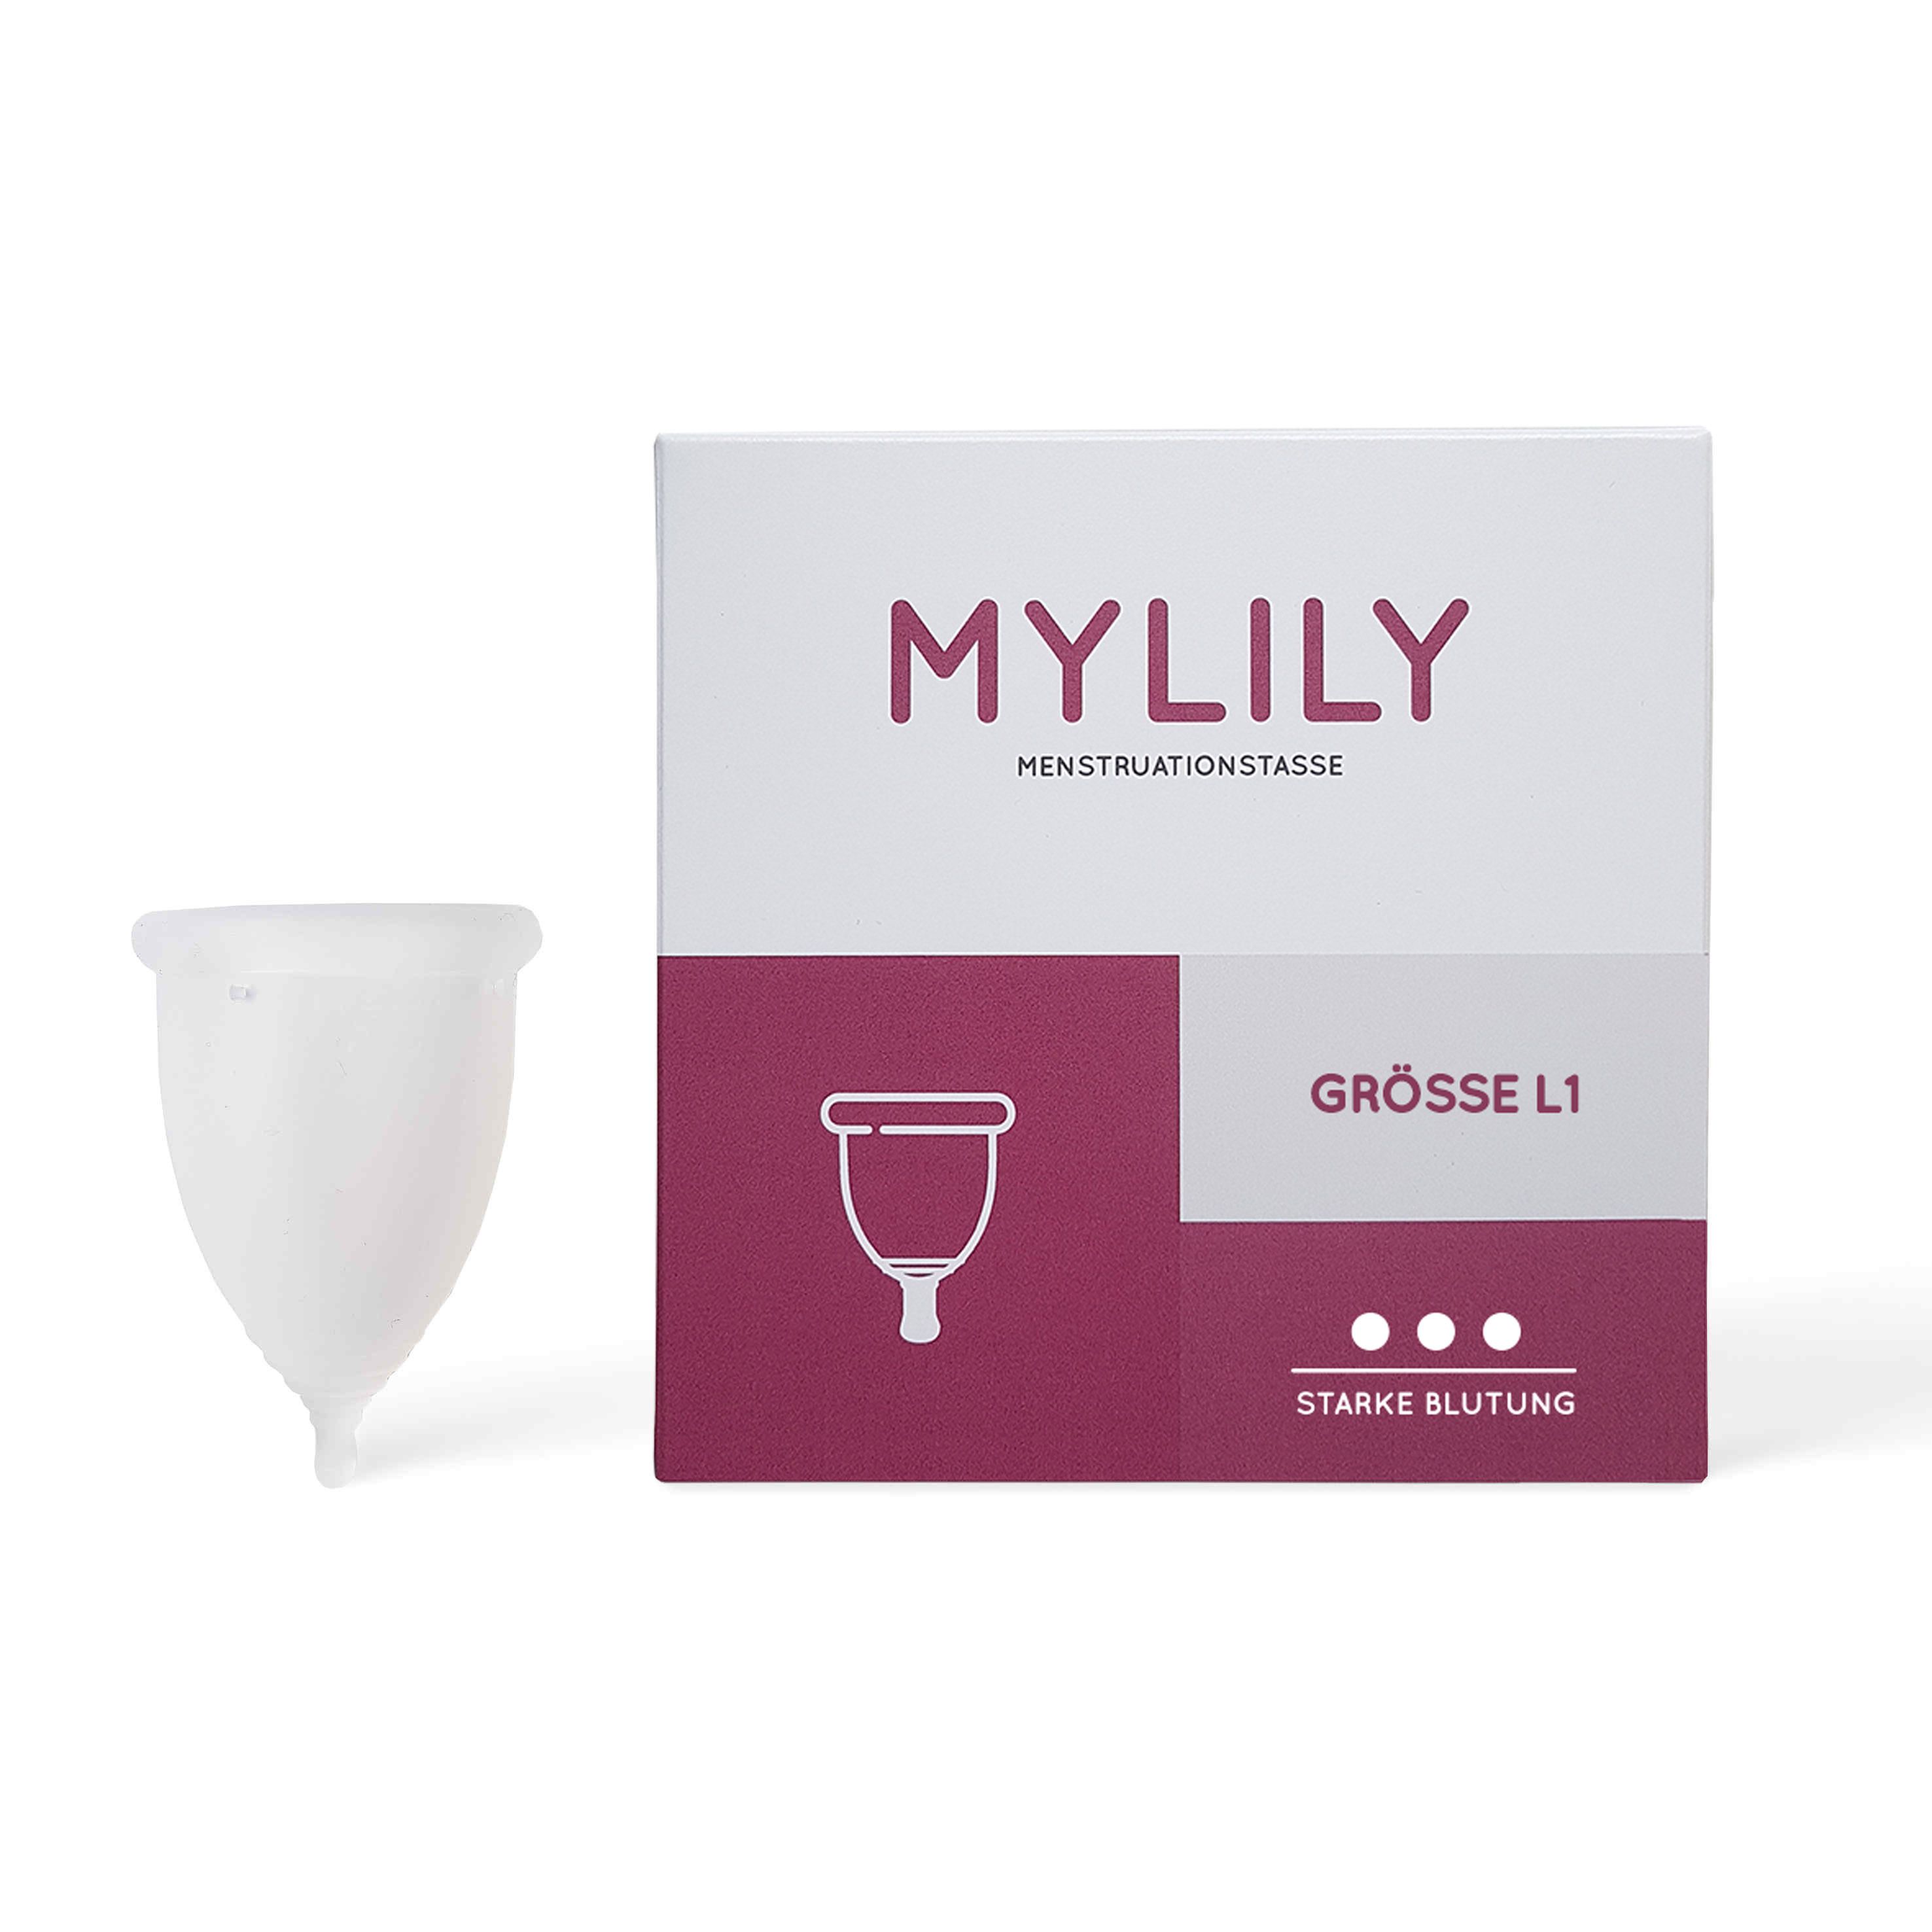 Mylily Menstruationstasse - L1